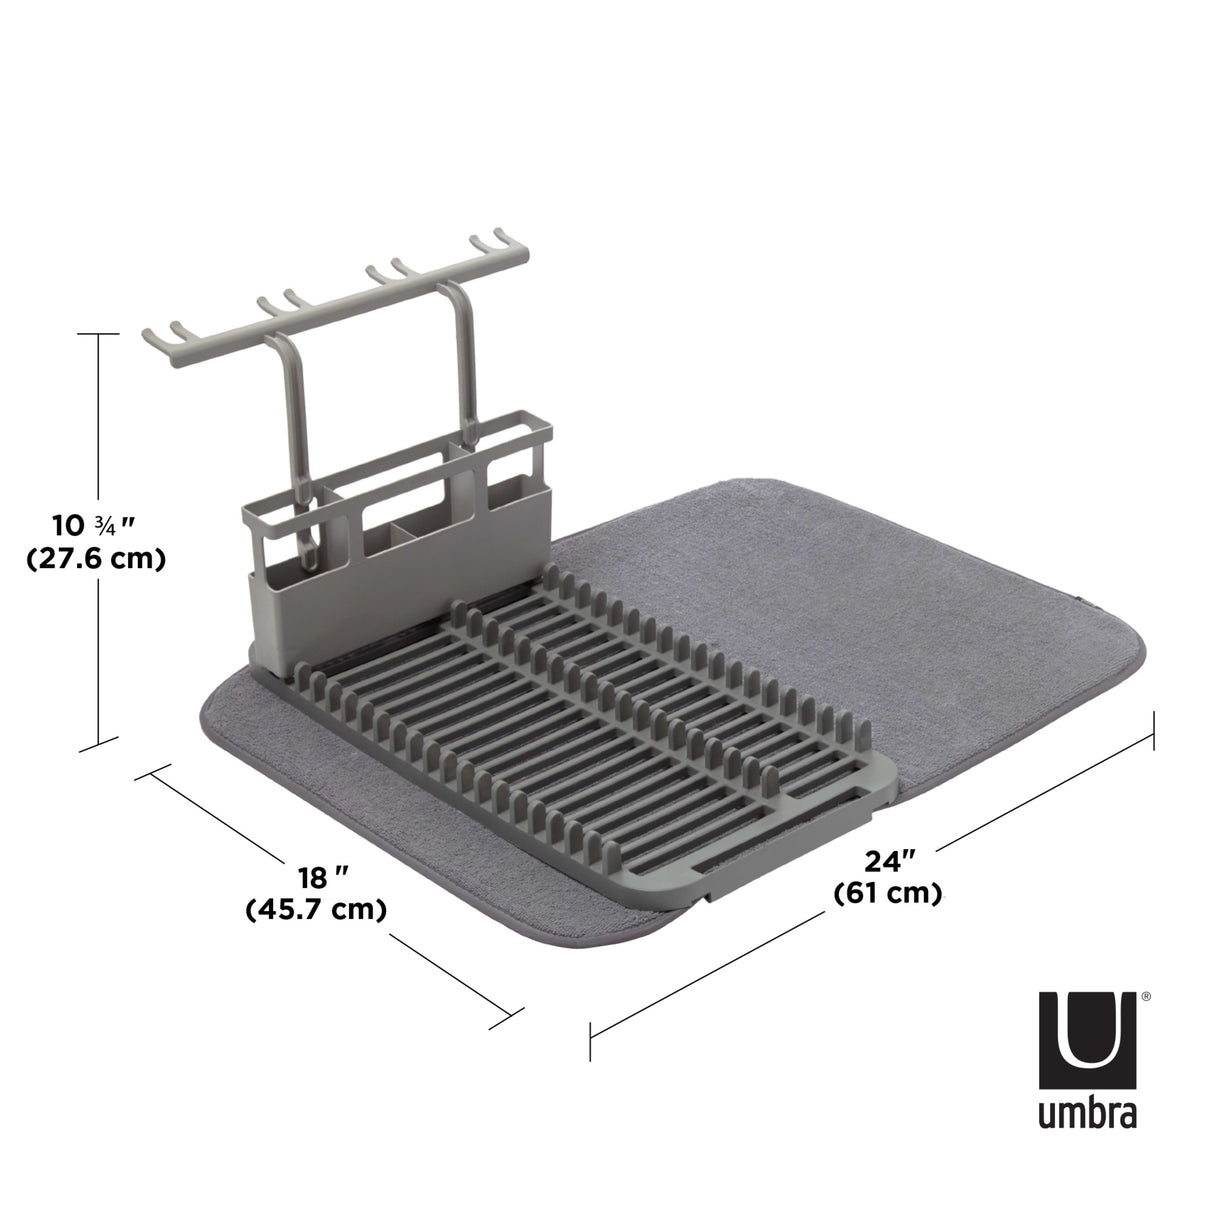 Umbra XDRY Dish Drying Rack and Microfiber Dish Mat-1009253-149